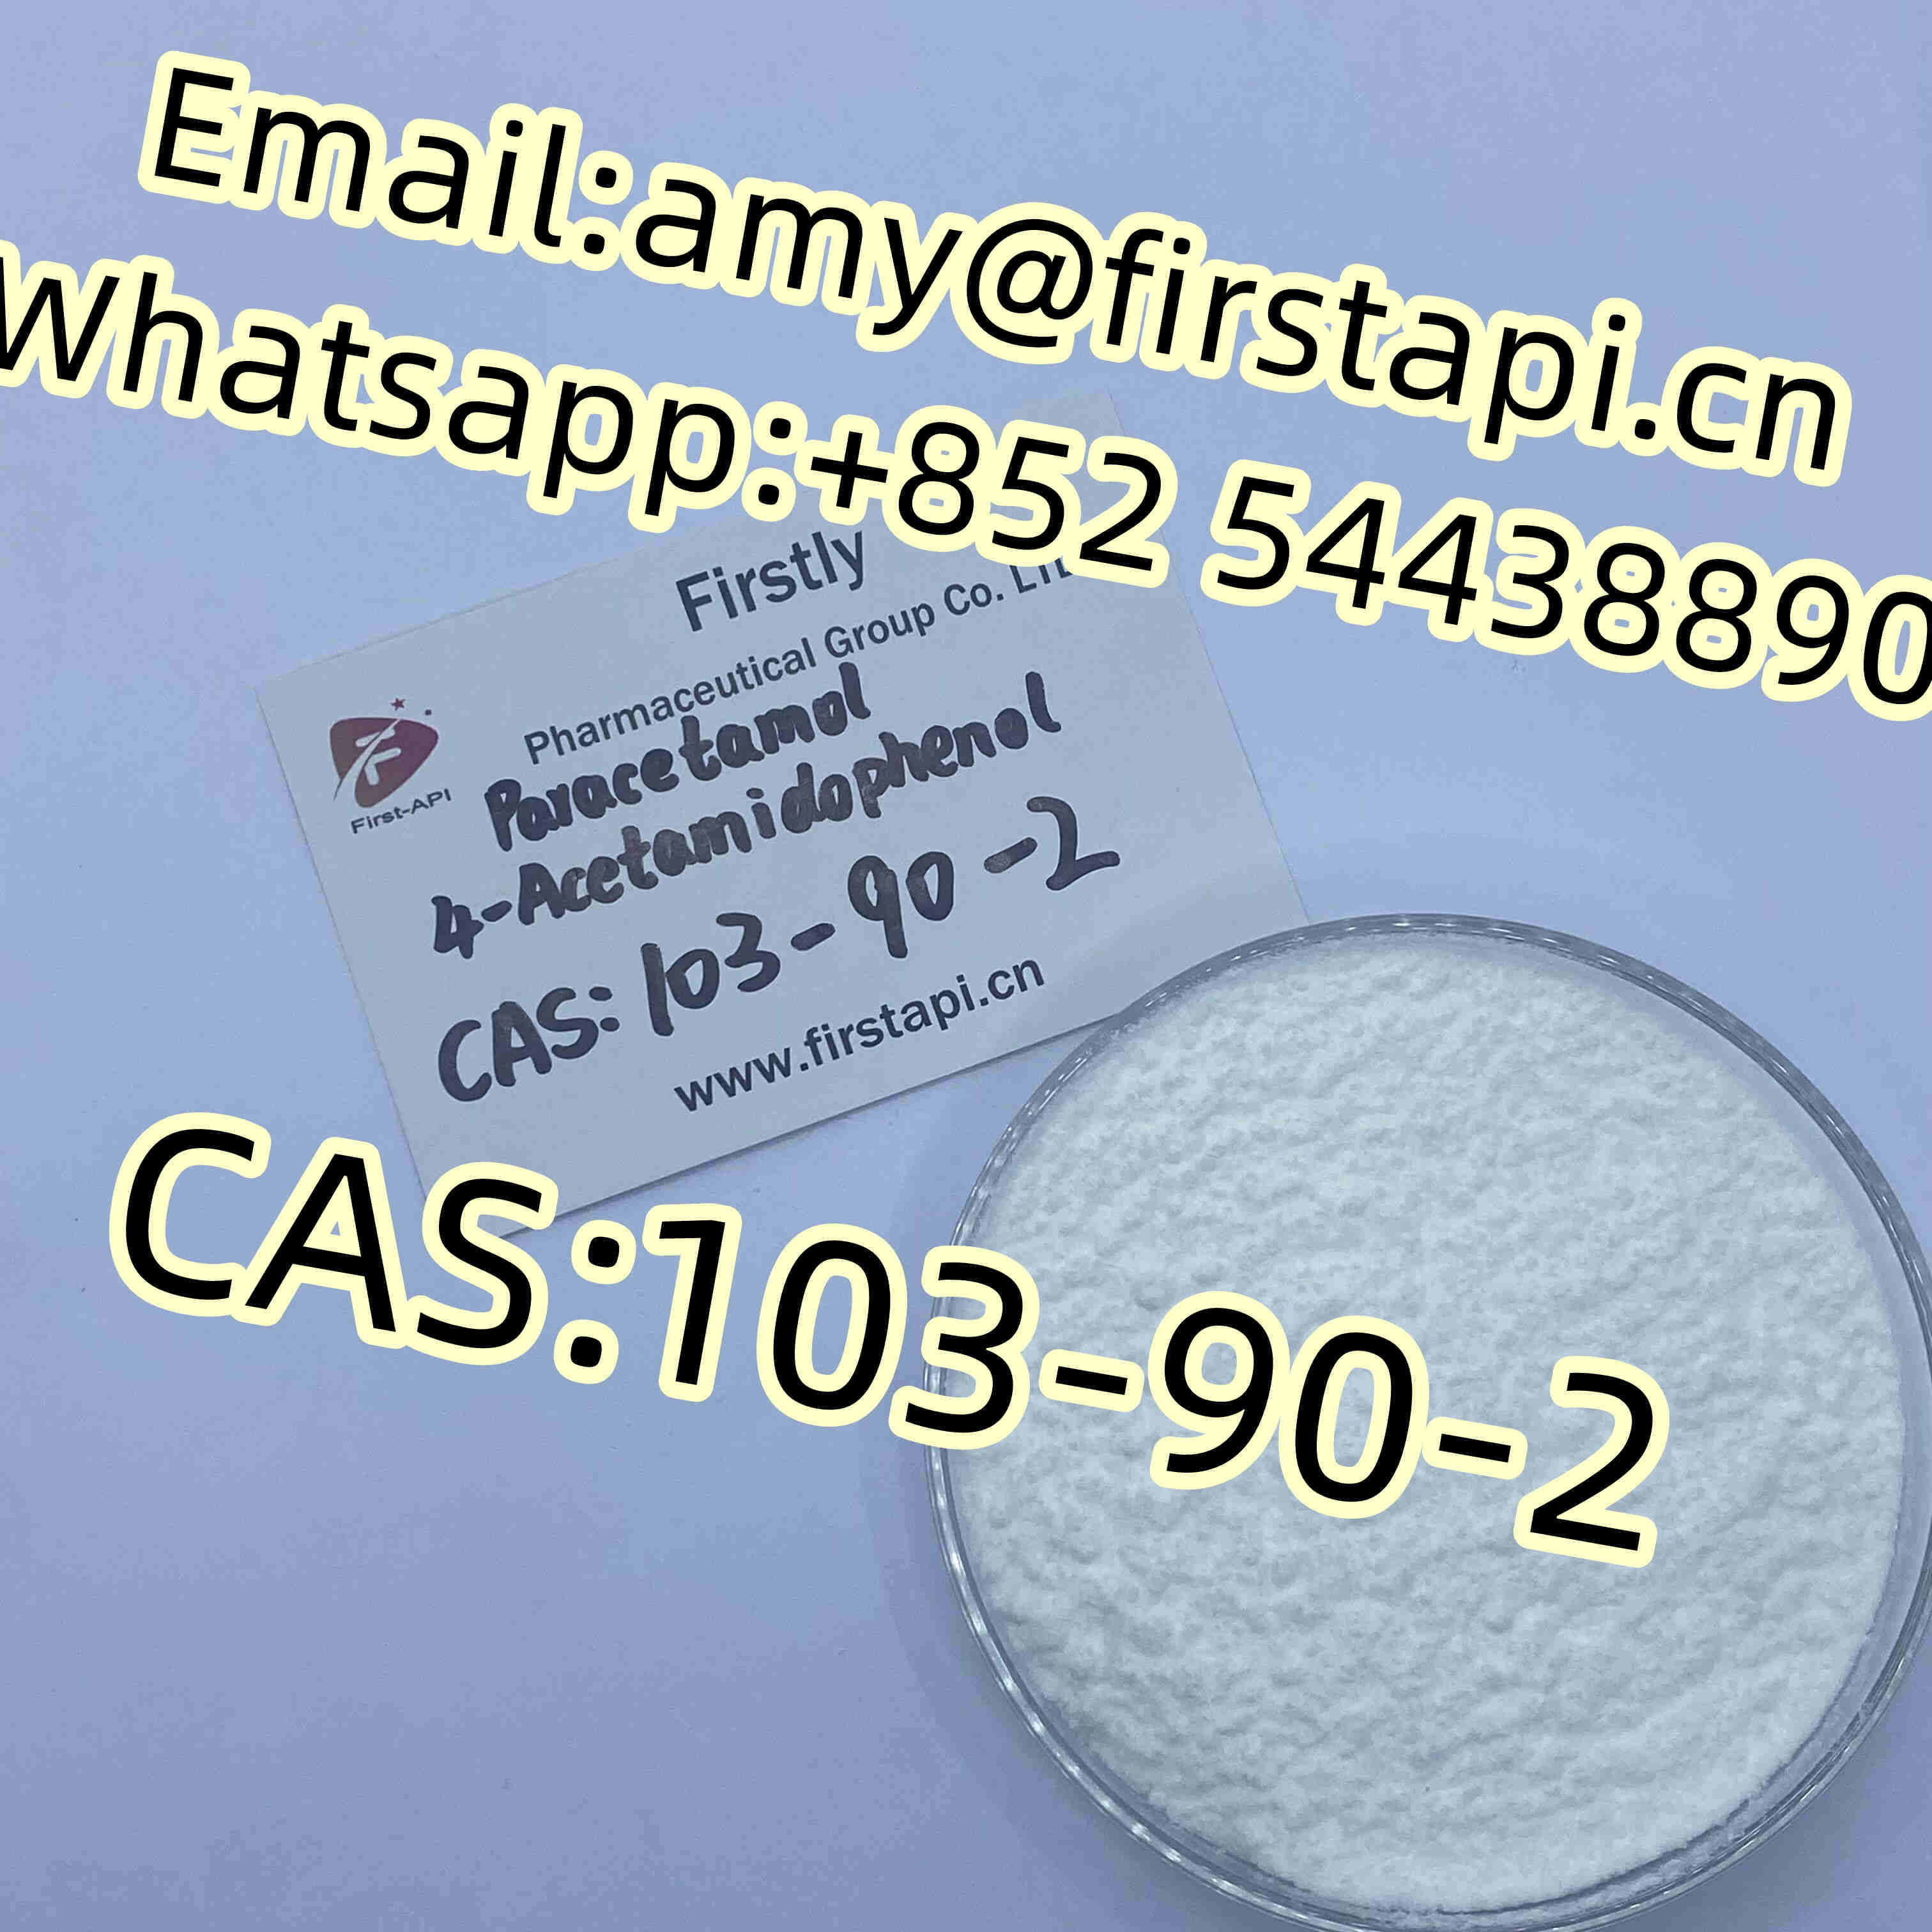 Whatsapp:+852 54438890   CAS No.:103-90-2   Chemical Name:Acetaminophen - photo